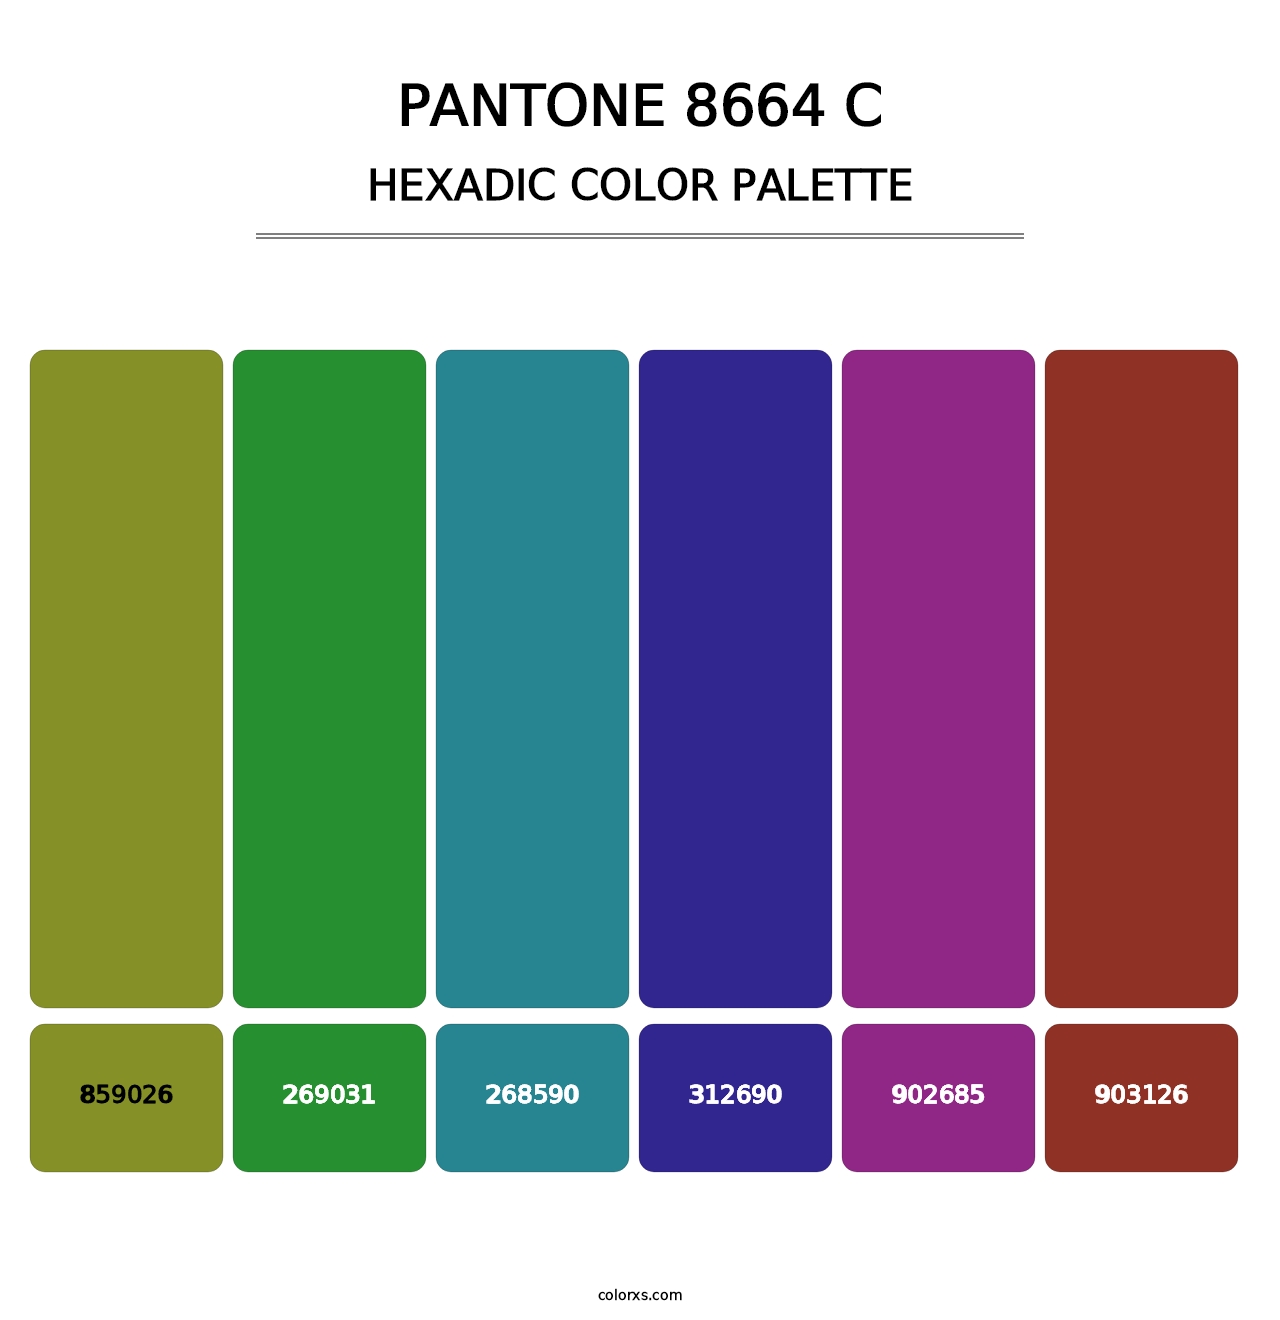 PANTONE 8664 C - Hexadic Color Palette